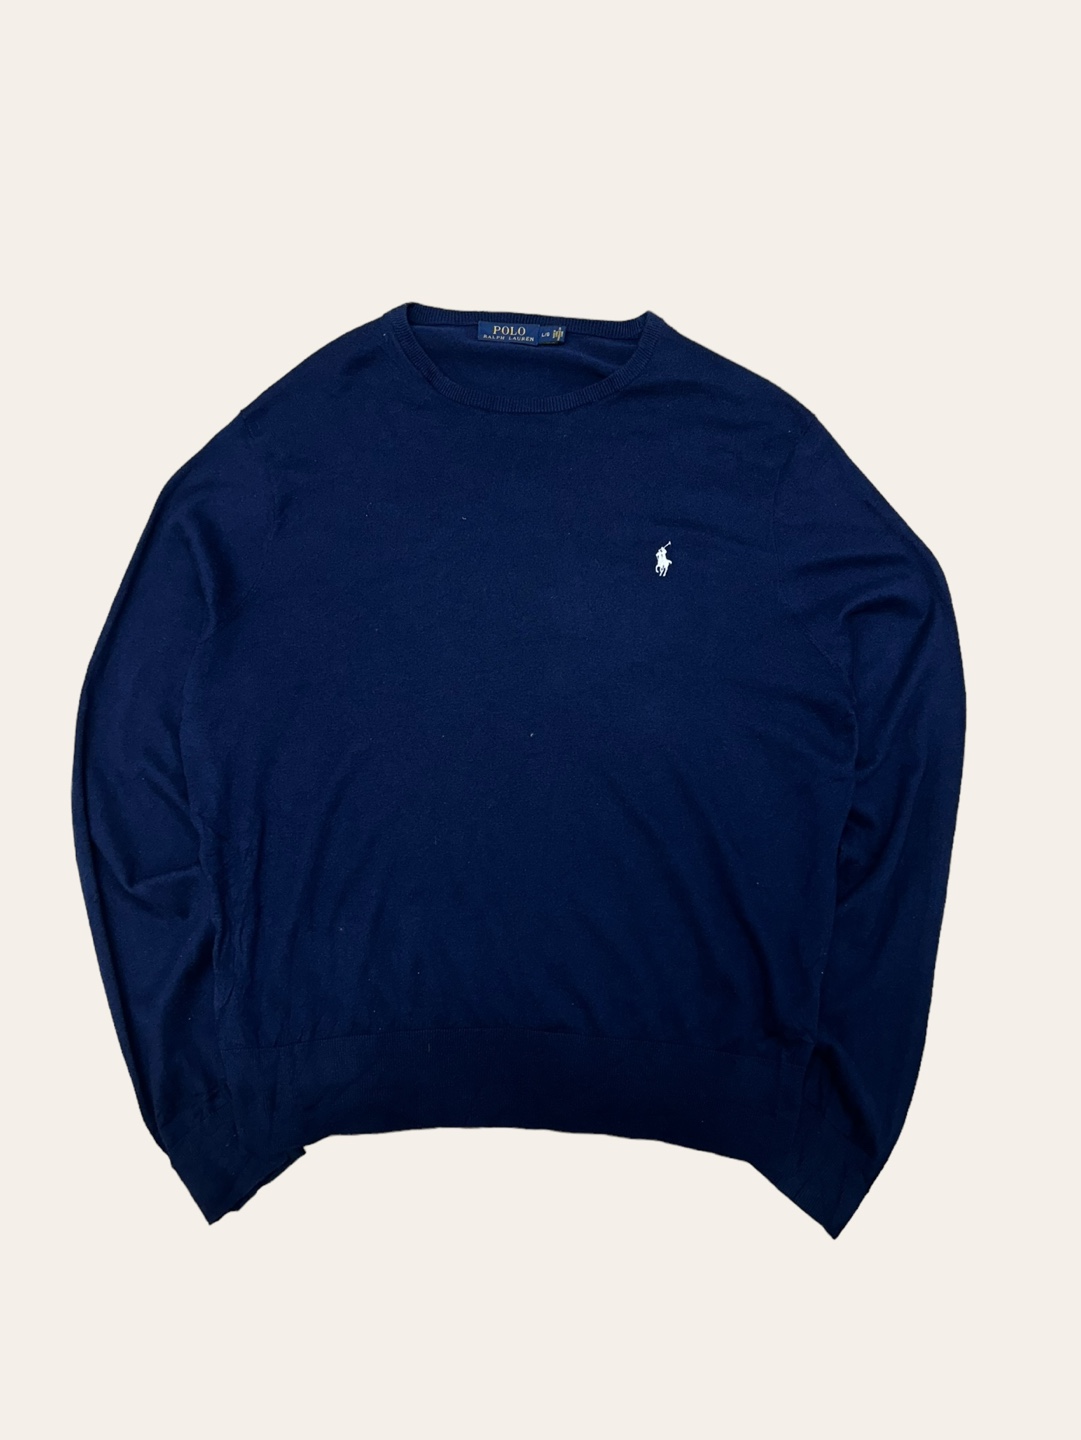 Polo ralph lauren navy cashmere blend crewneck sweater L